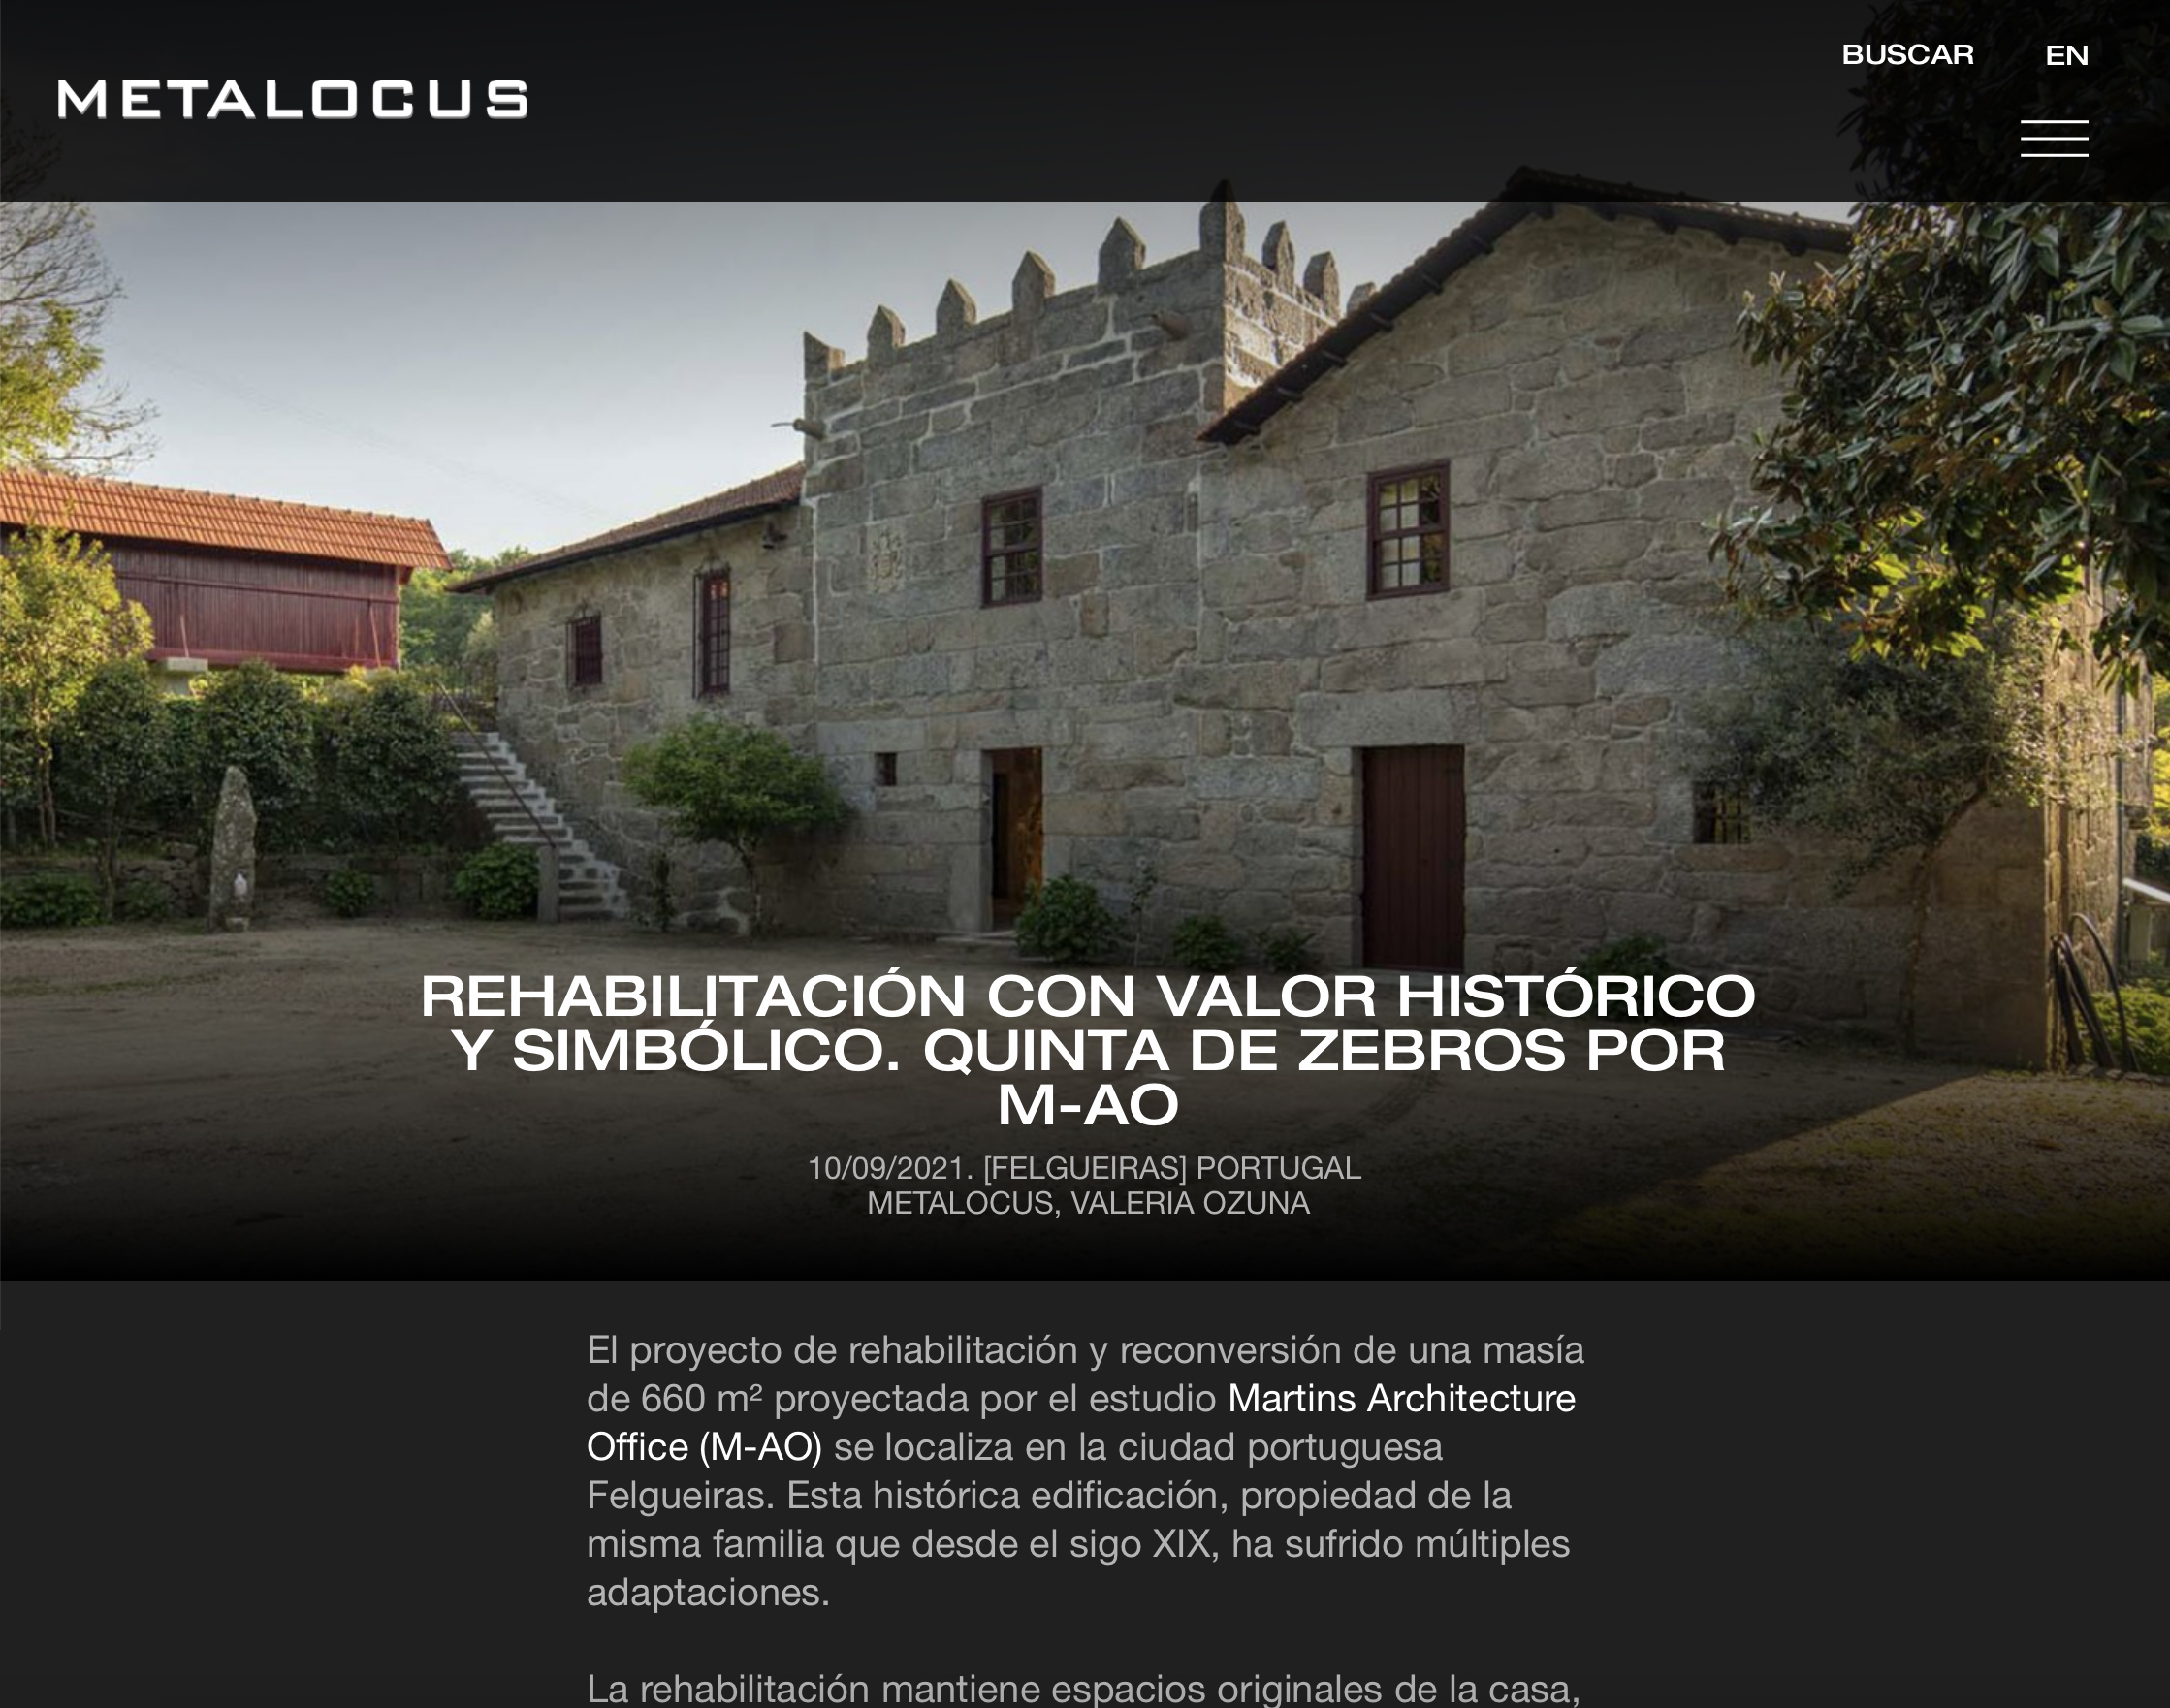 Metalocus has published our Zebros project.